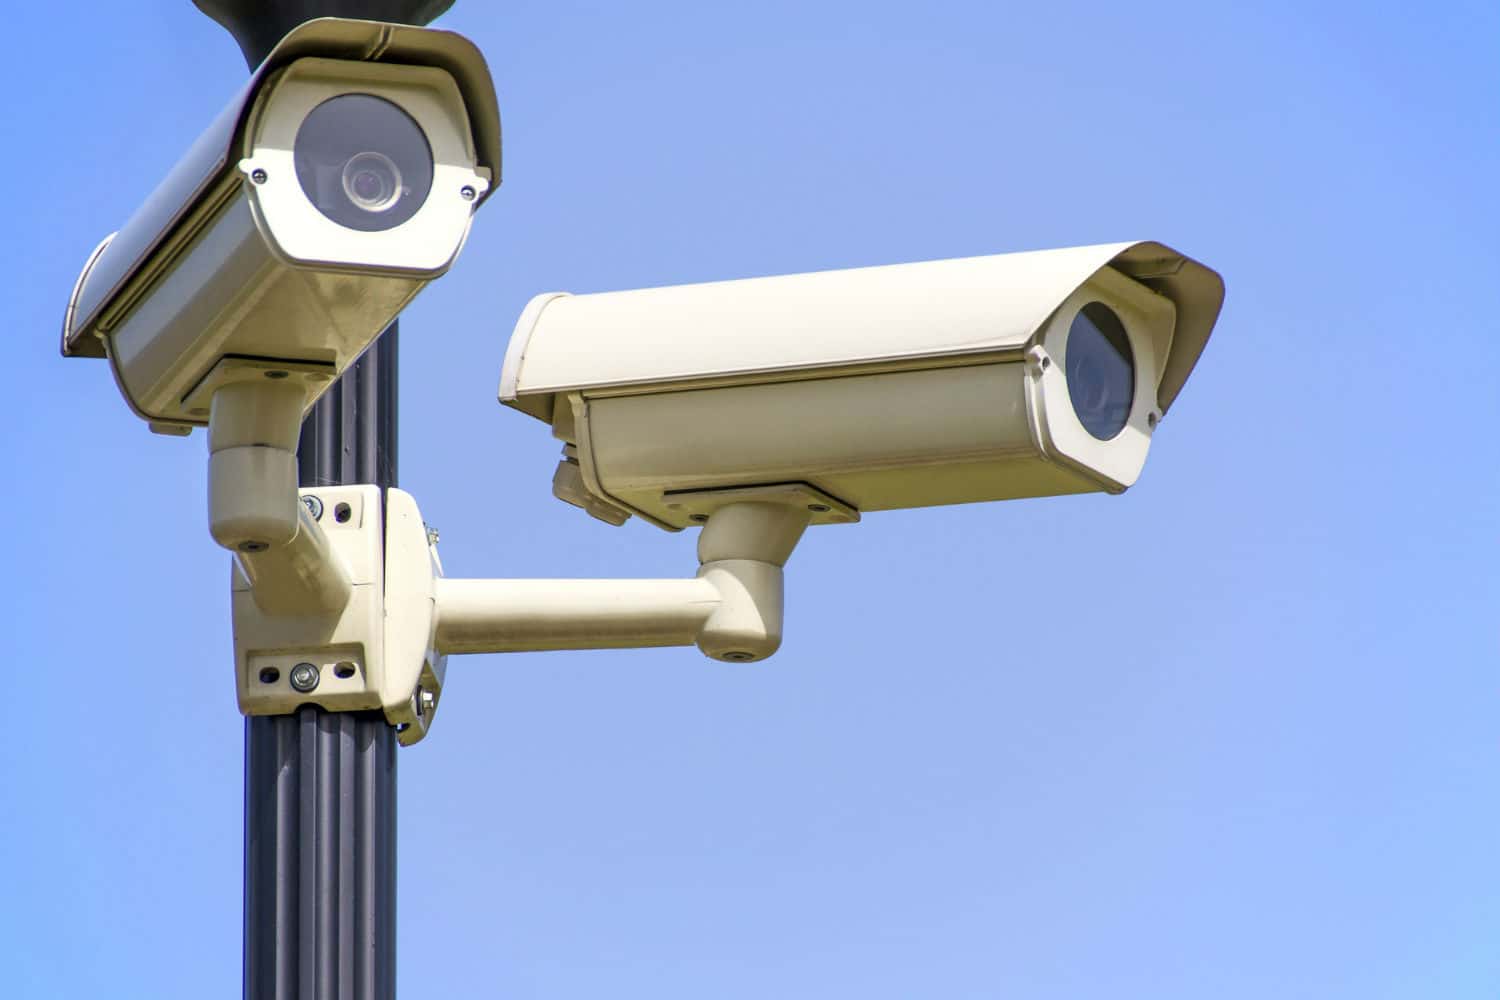 Business Video Surveillance Systems, Video Surveillance for Business